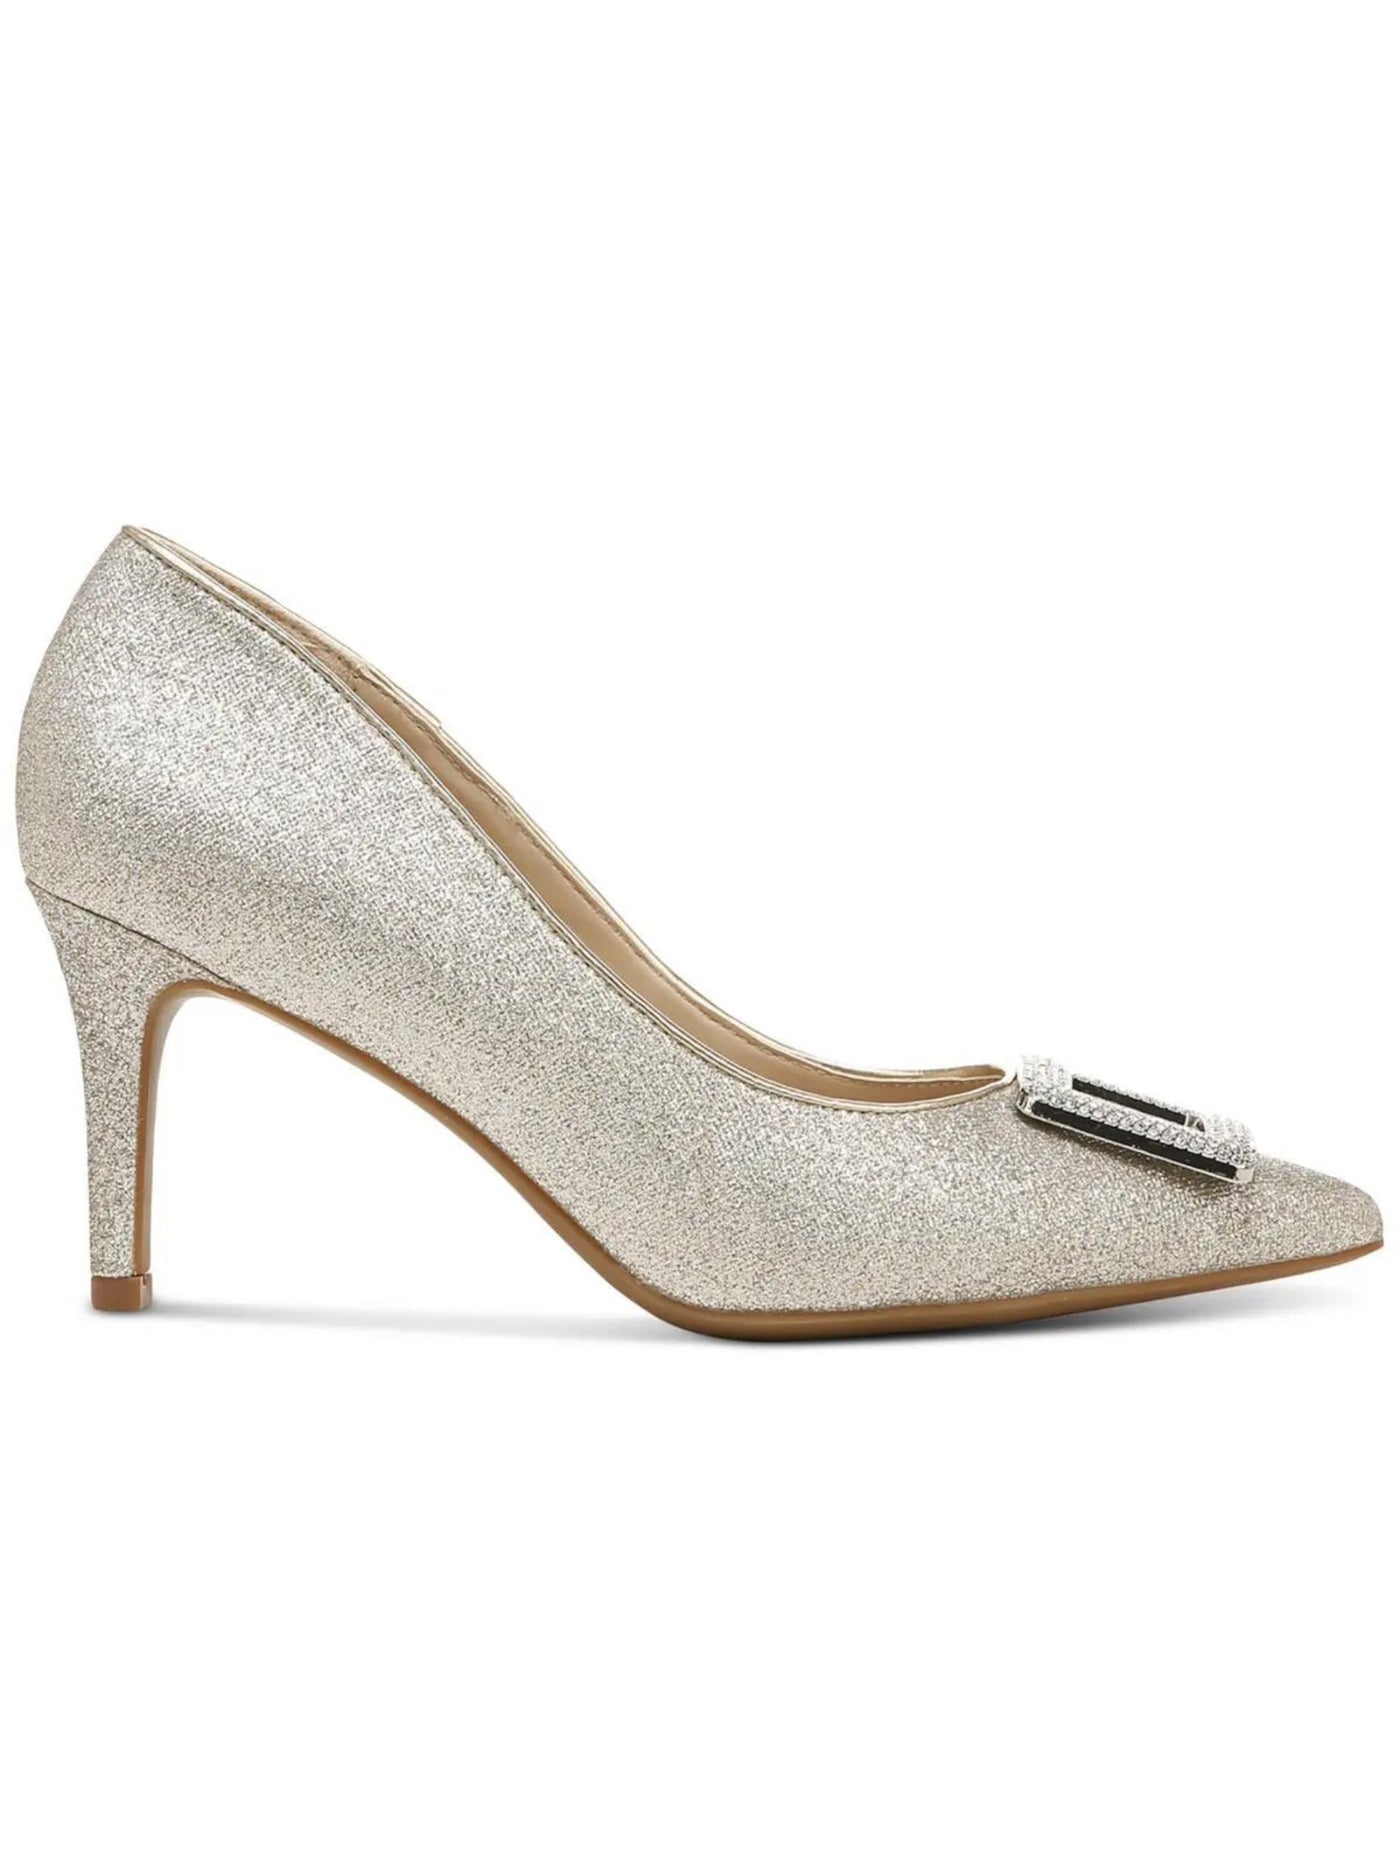 ALFANI Womens Silver Buckle Accent Jerison Pointed Toe Stiletto Slip On Dress Pumps Shoes 10.5 M